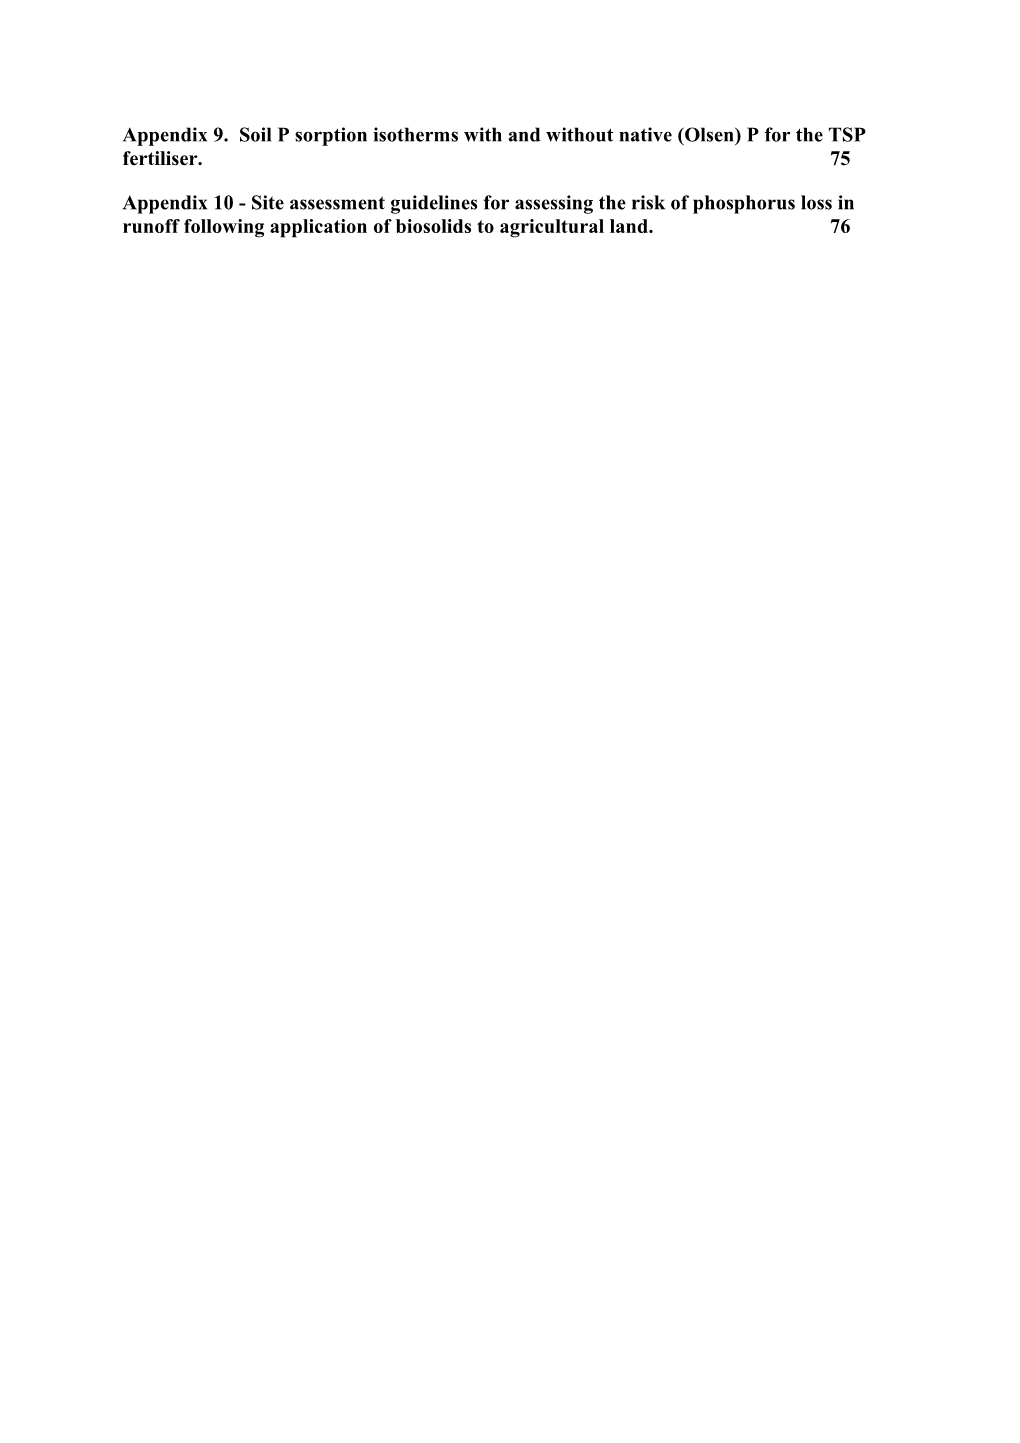 Standard UKWIR Technical Report Format